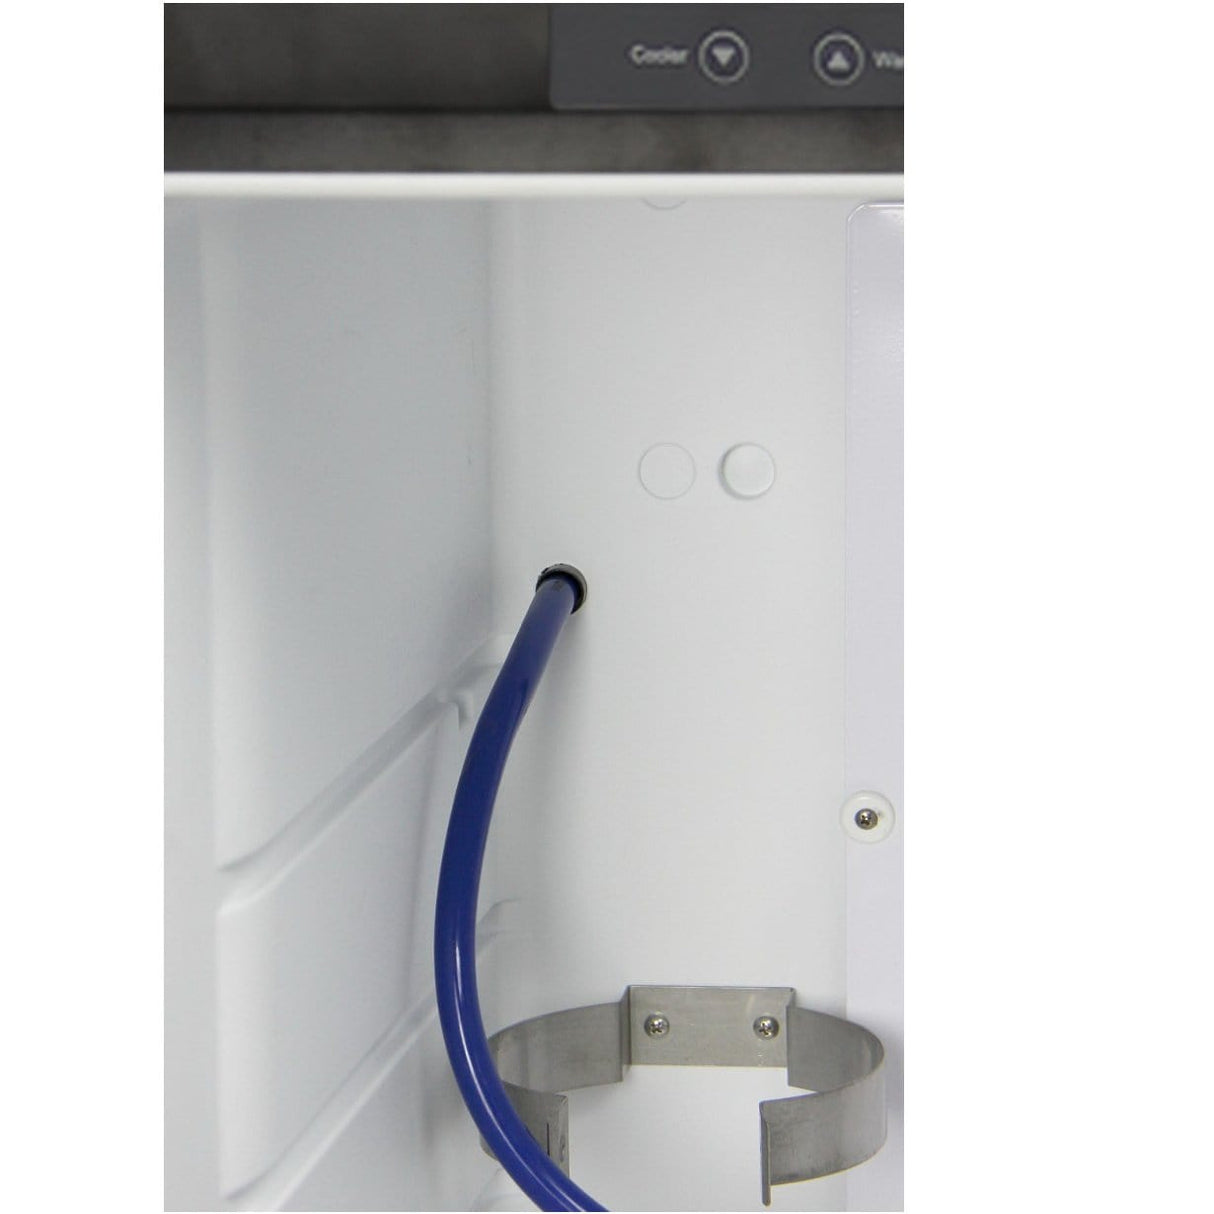 Kegco Three Keg Tap Faucet Digital Kegerator - Black Matte Cabinet and Stainless Steel Door (K309SS-3NK)